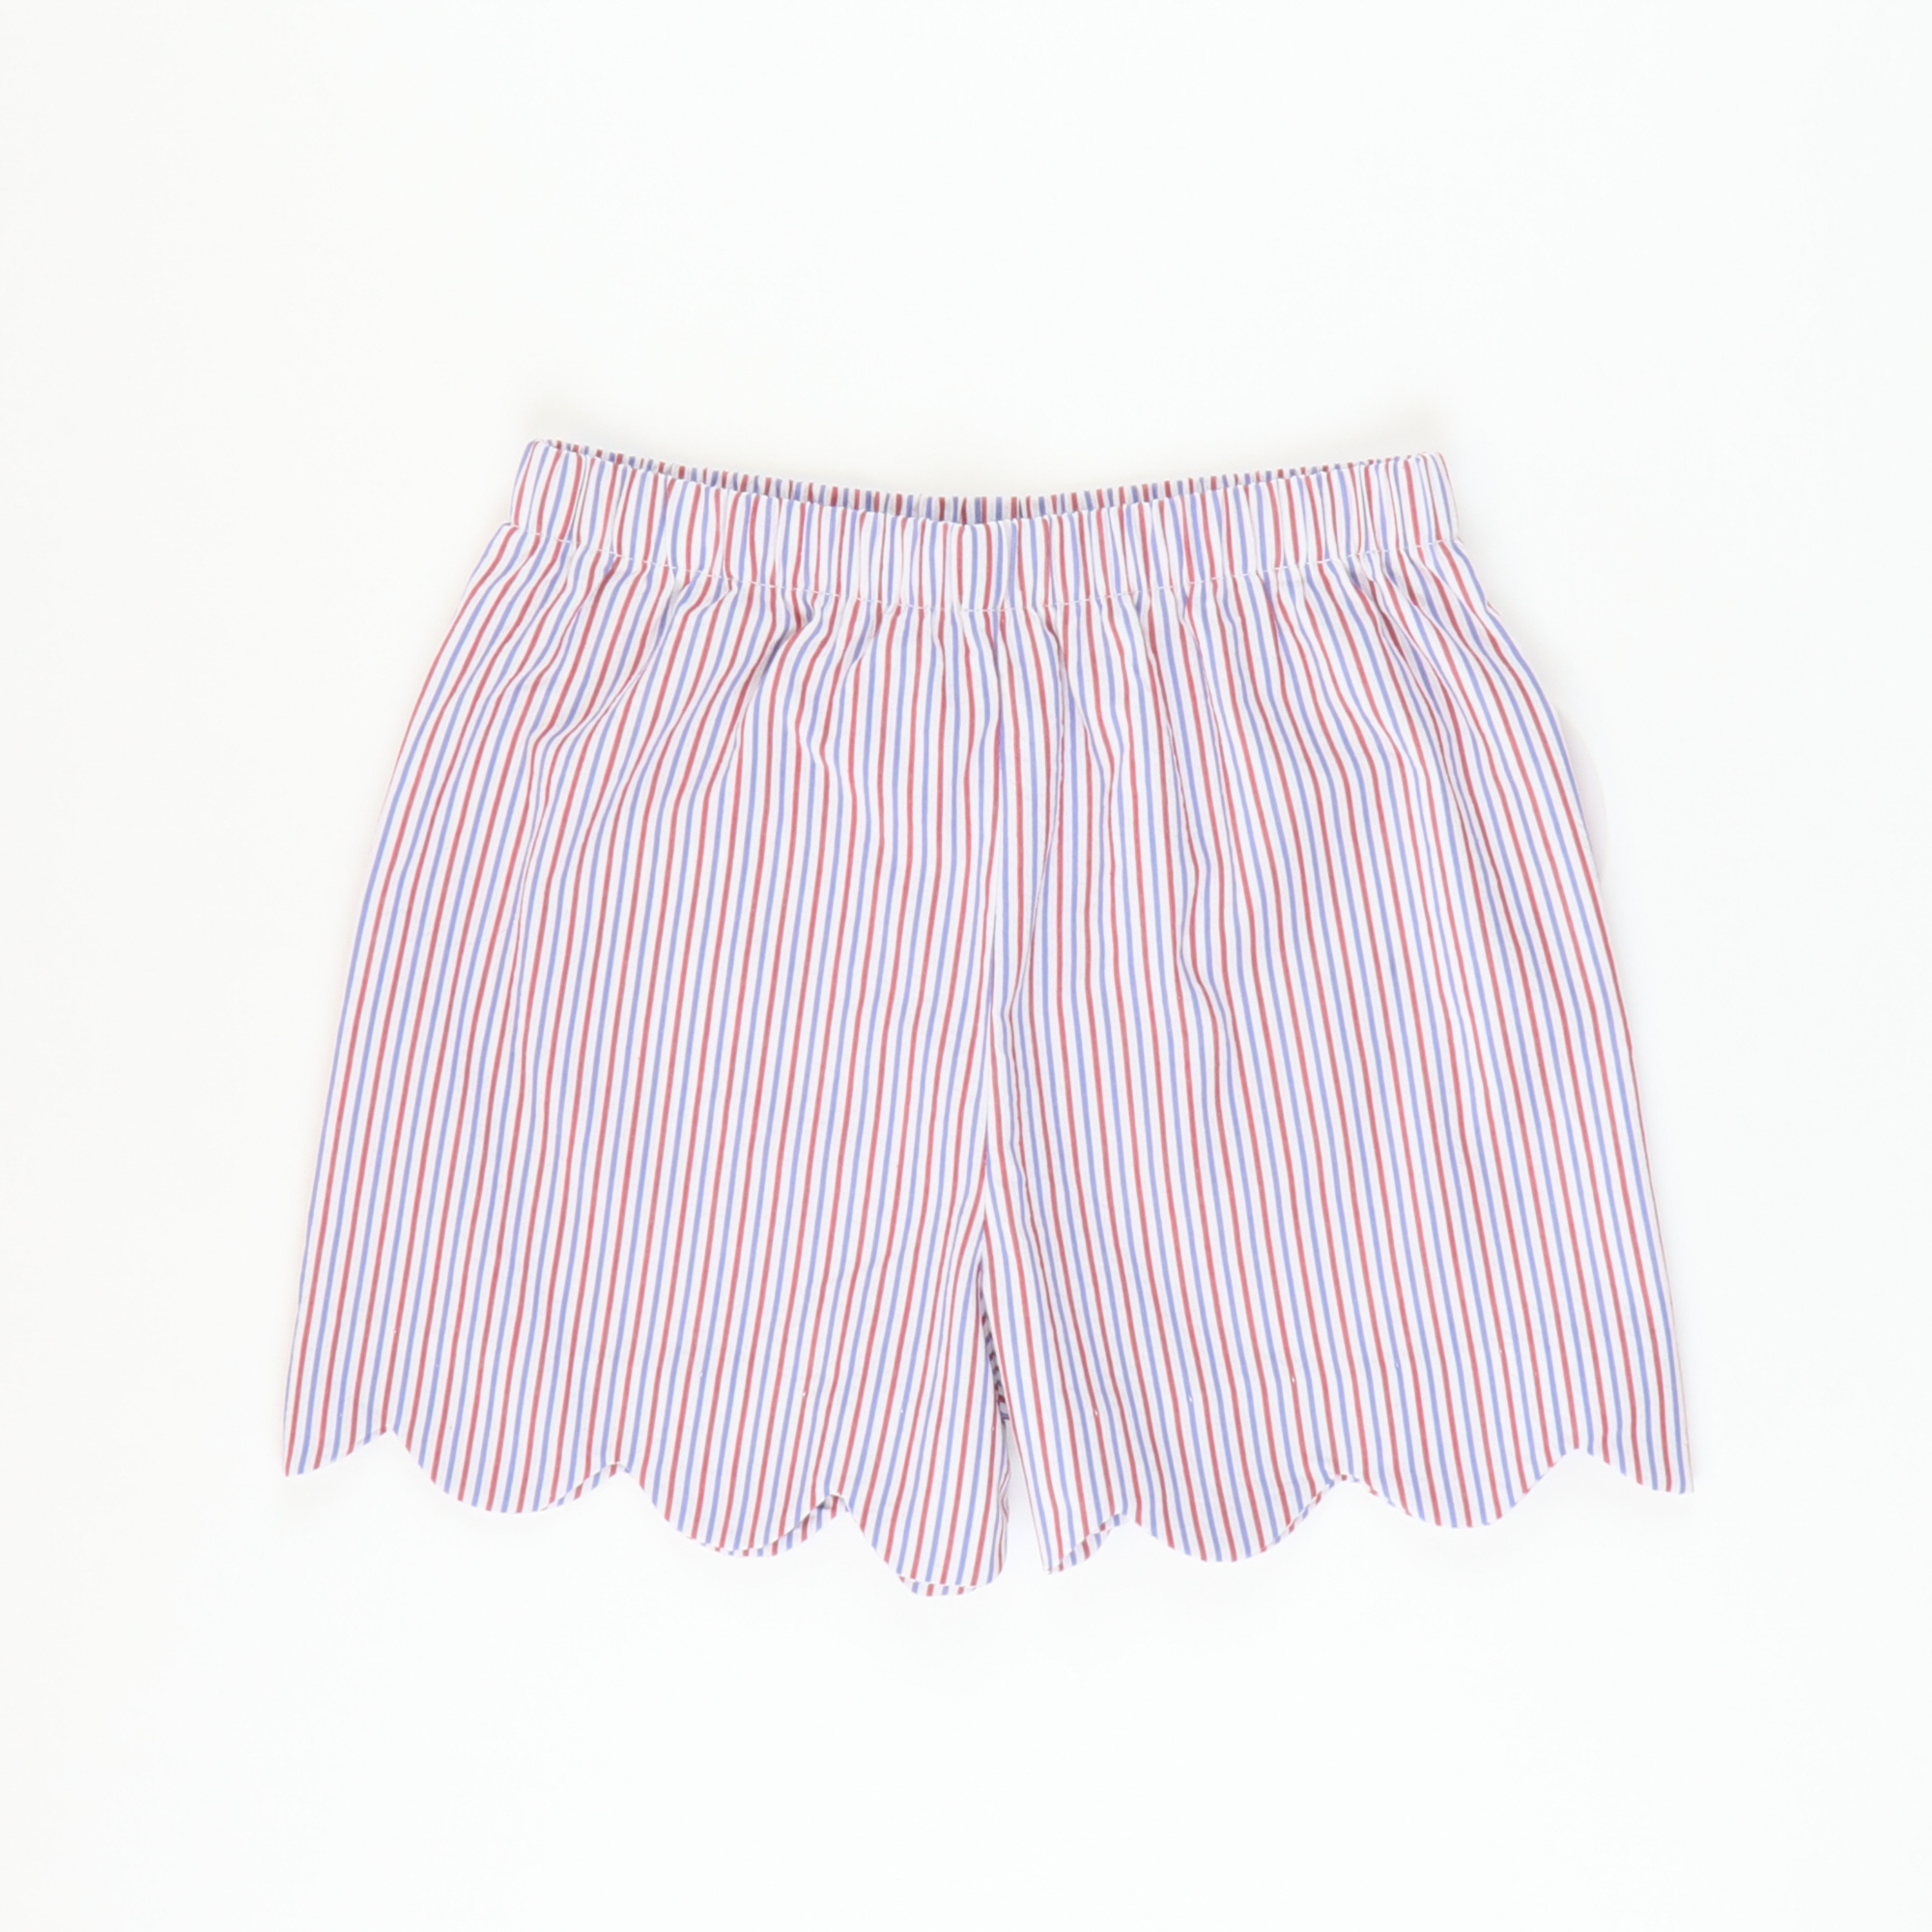 Scalloped Girl Shorts - Patriotic Stripe Seersucker